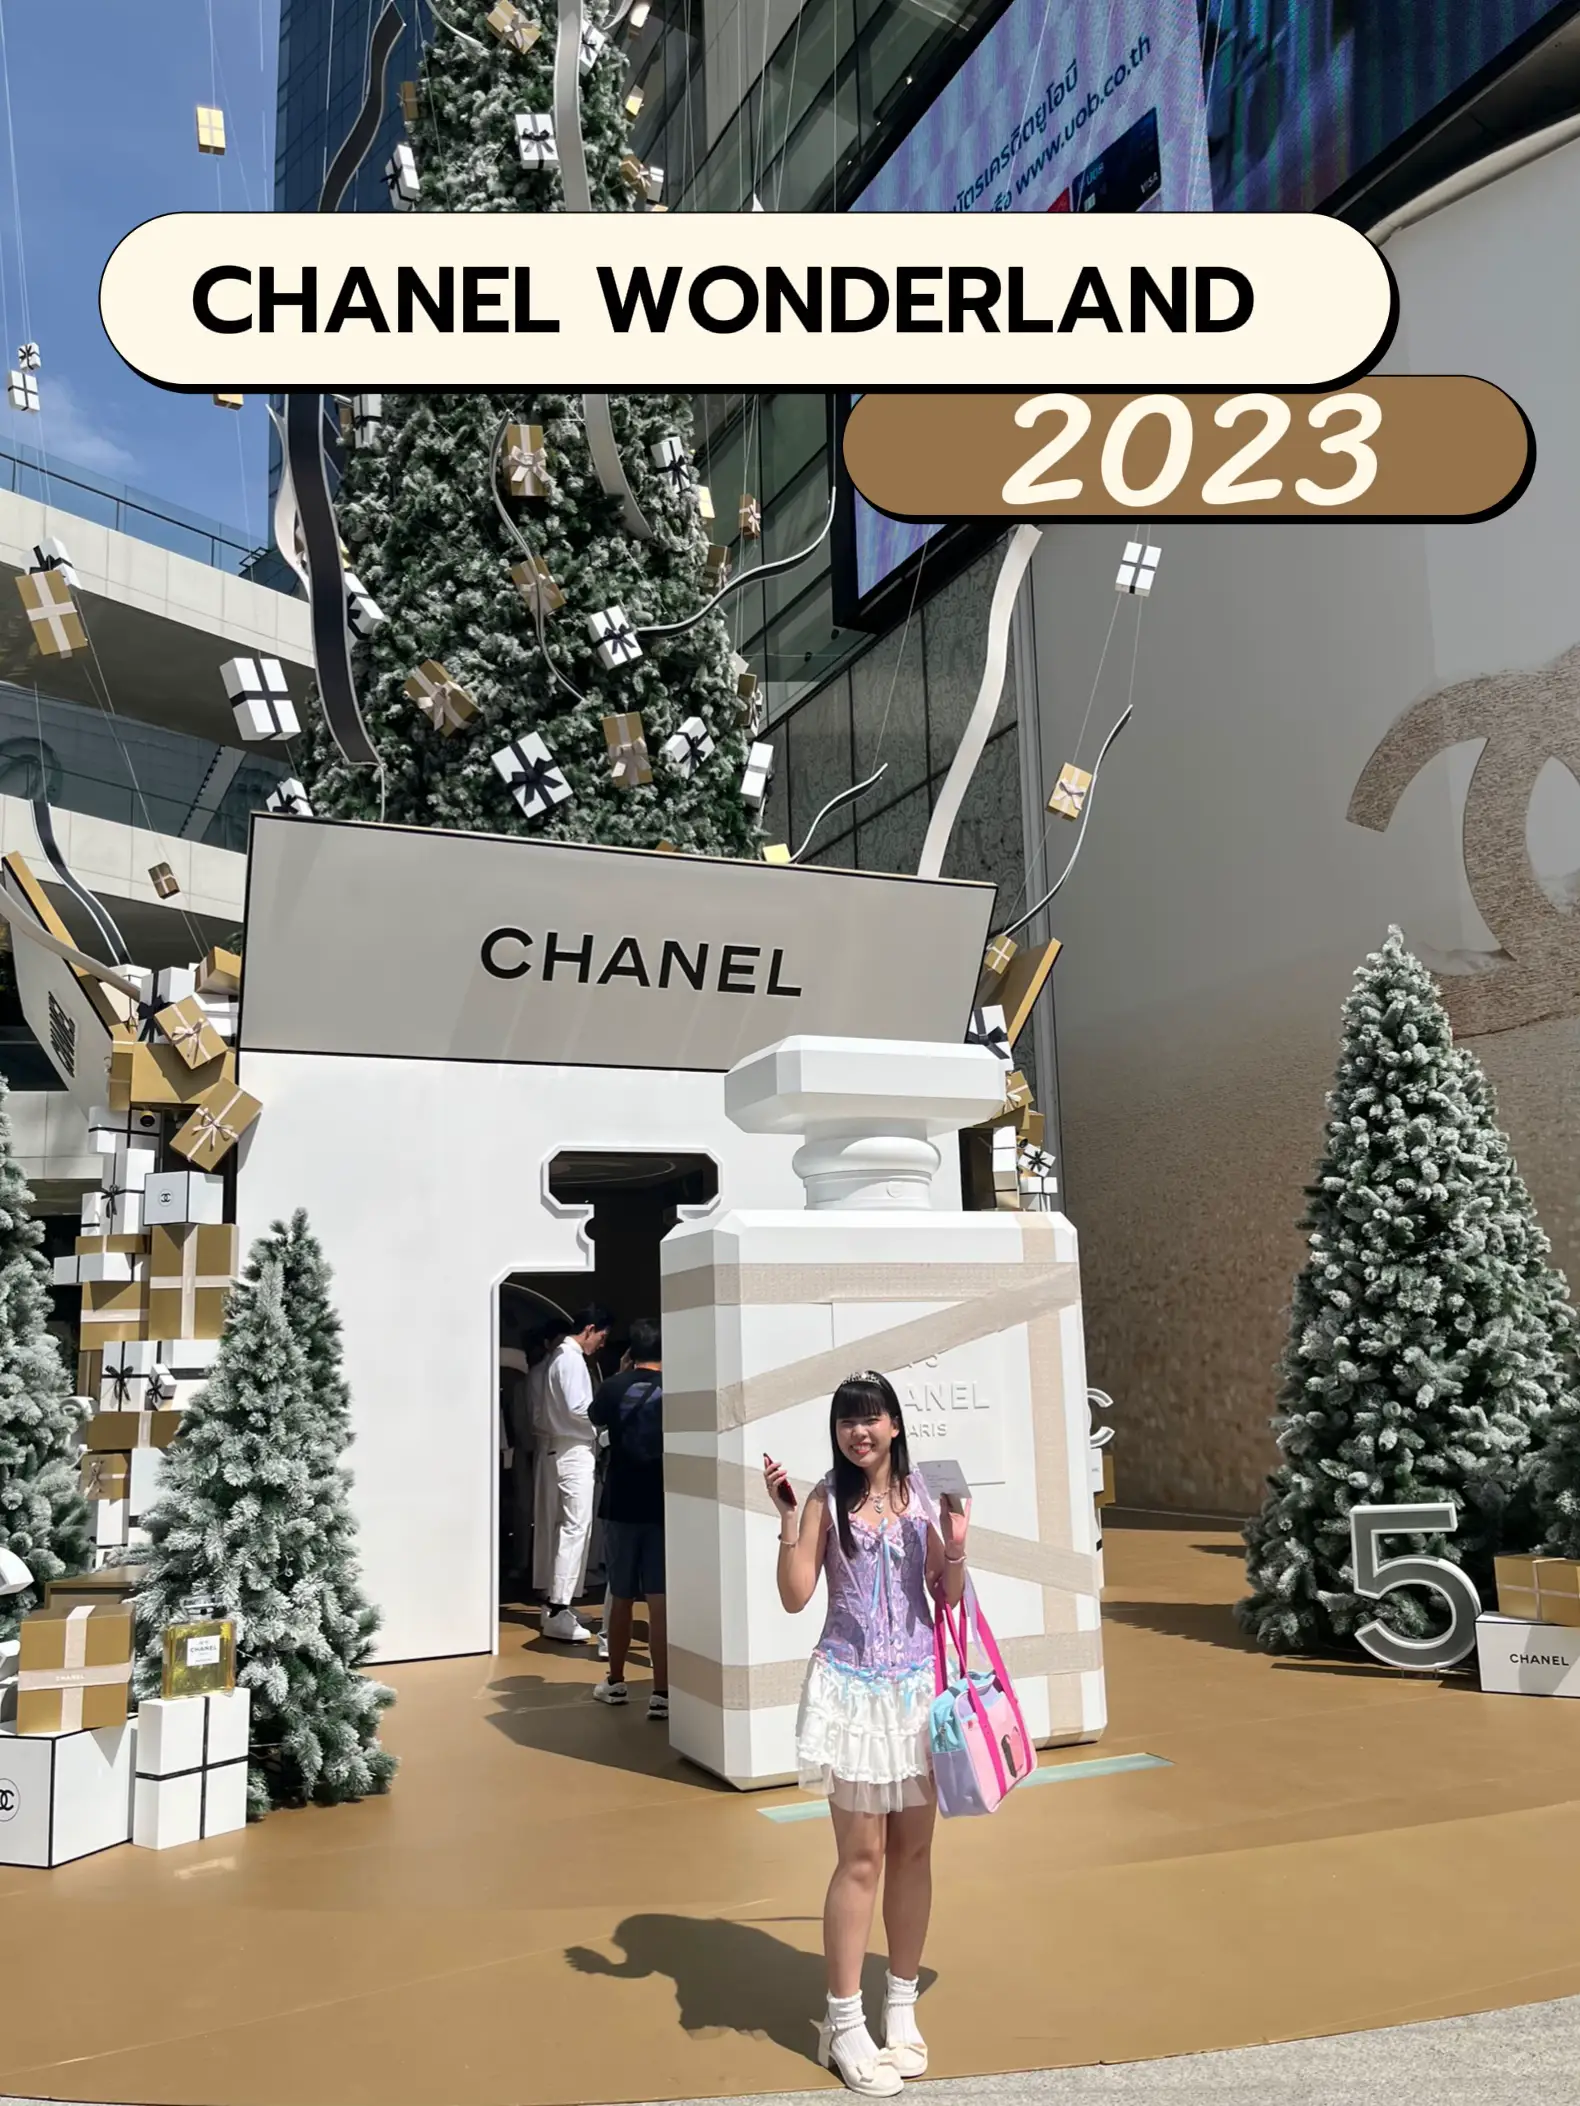 Merry Christmas w/ Chanel Wonderland ✨ | Jinny Suphatchaが投稿